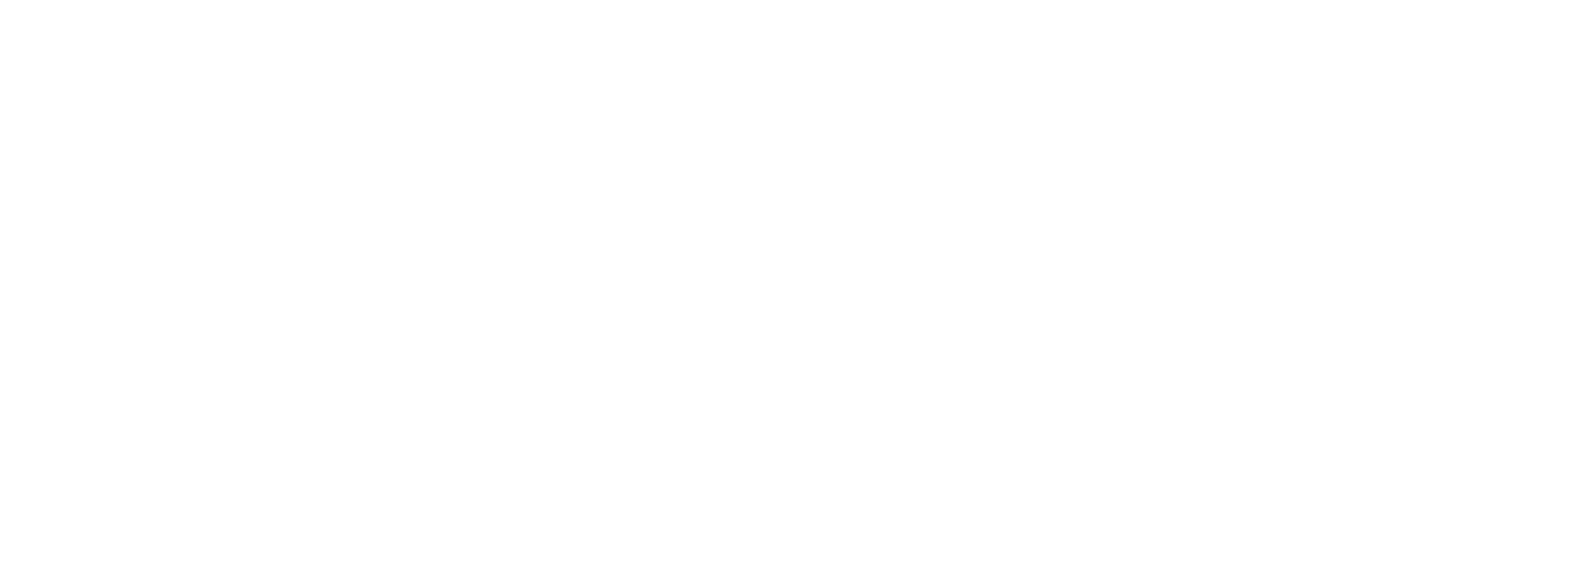 ENJOY PRIMITIVE WEDDING WITH YOUR LOVE ONES 大切な人たちと自分らしい結婚式を